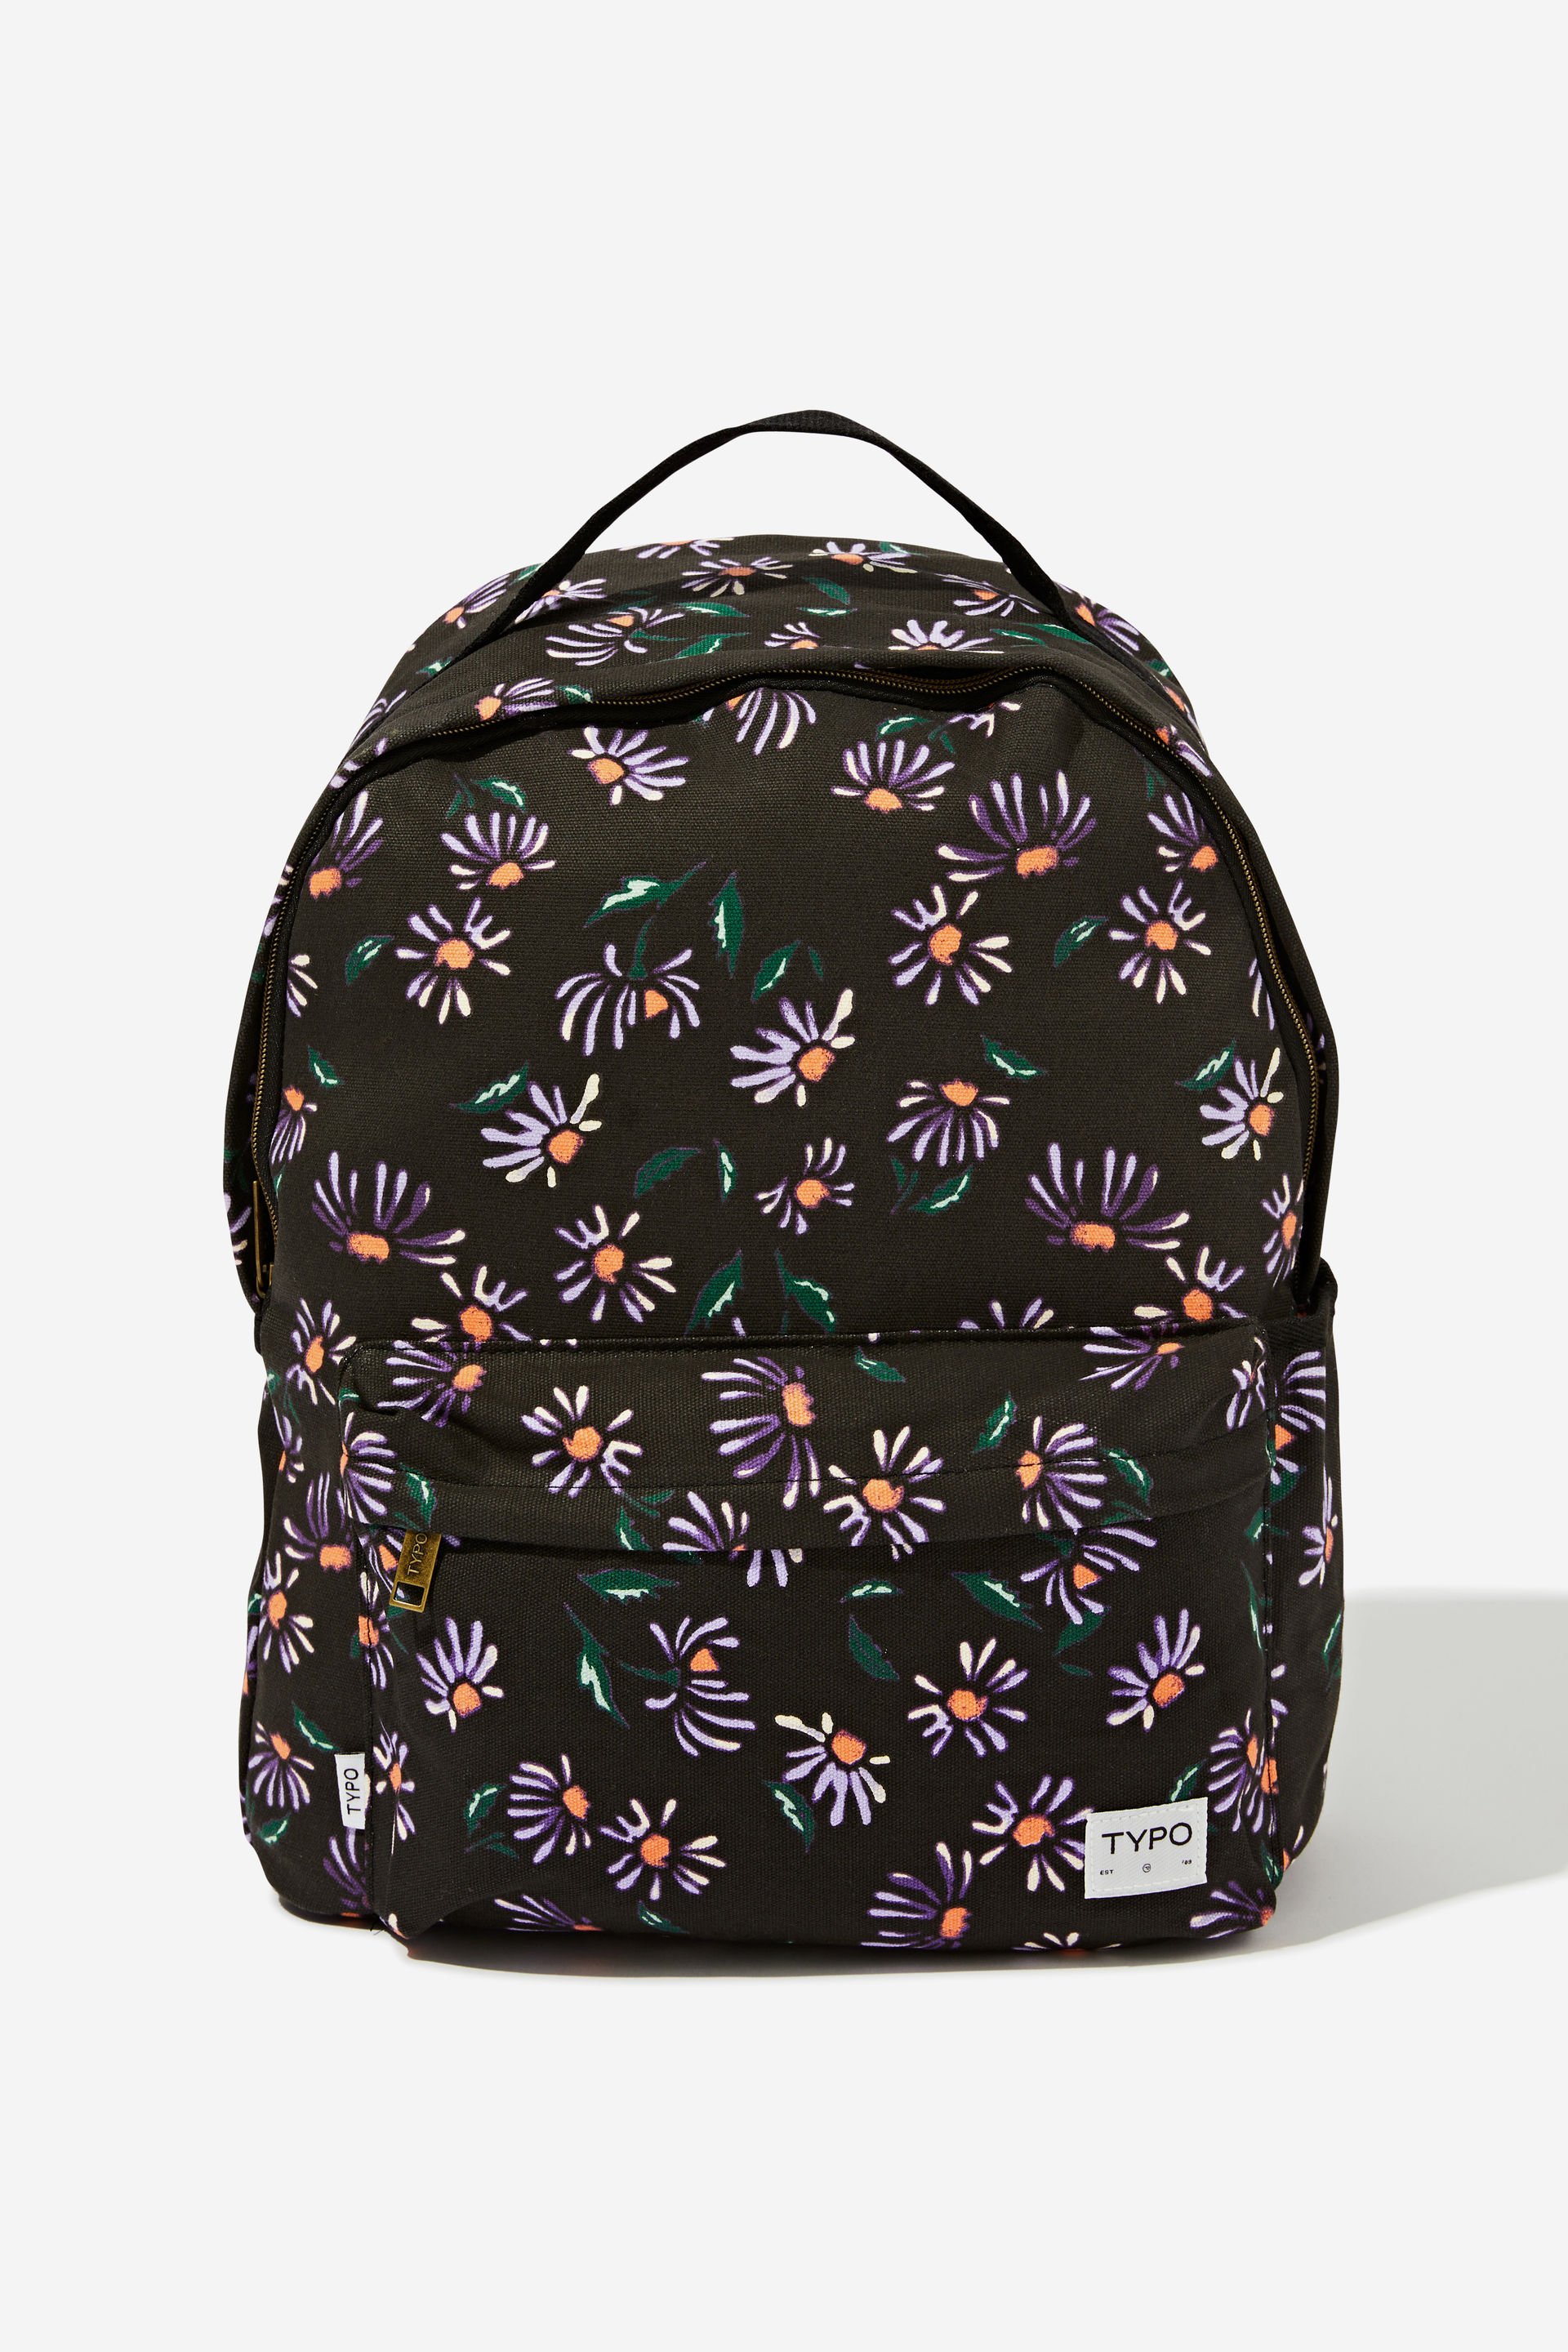 Typo - Alumni Backpack - Daisy crayon / black